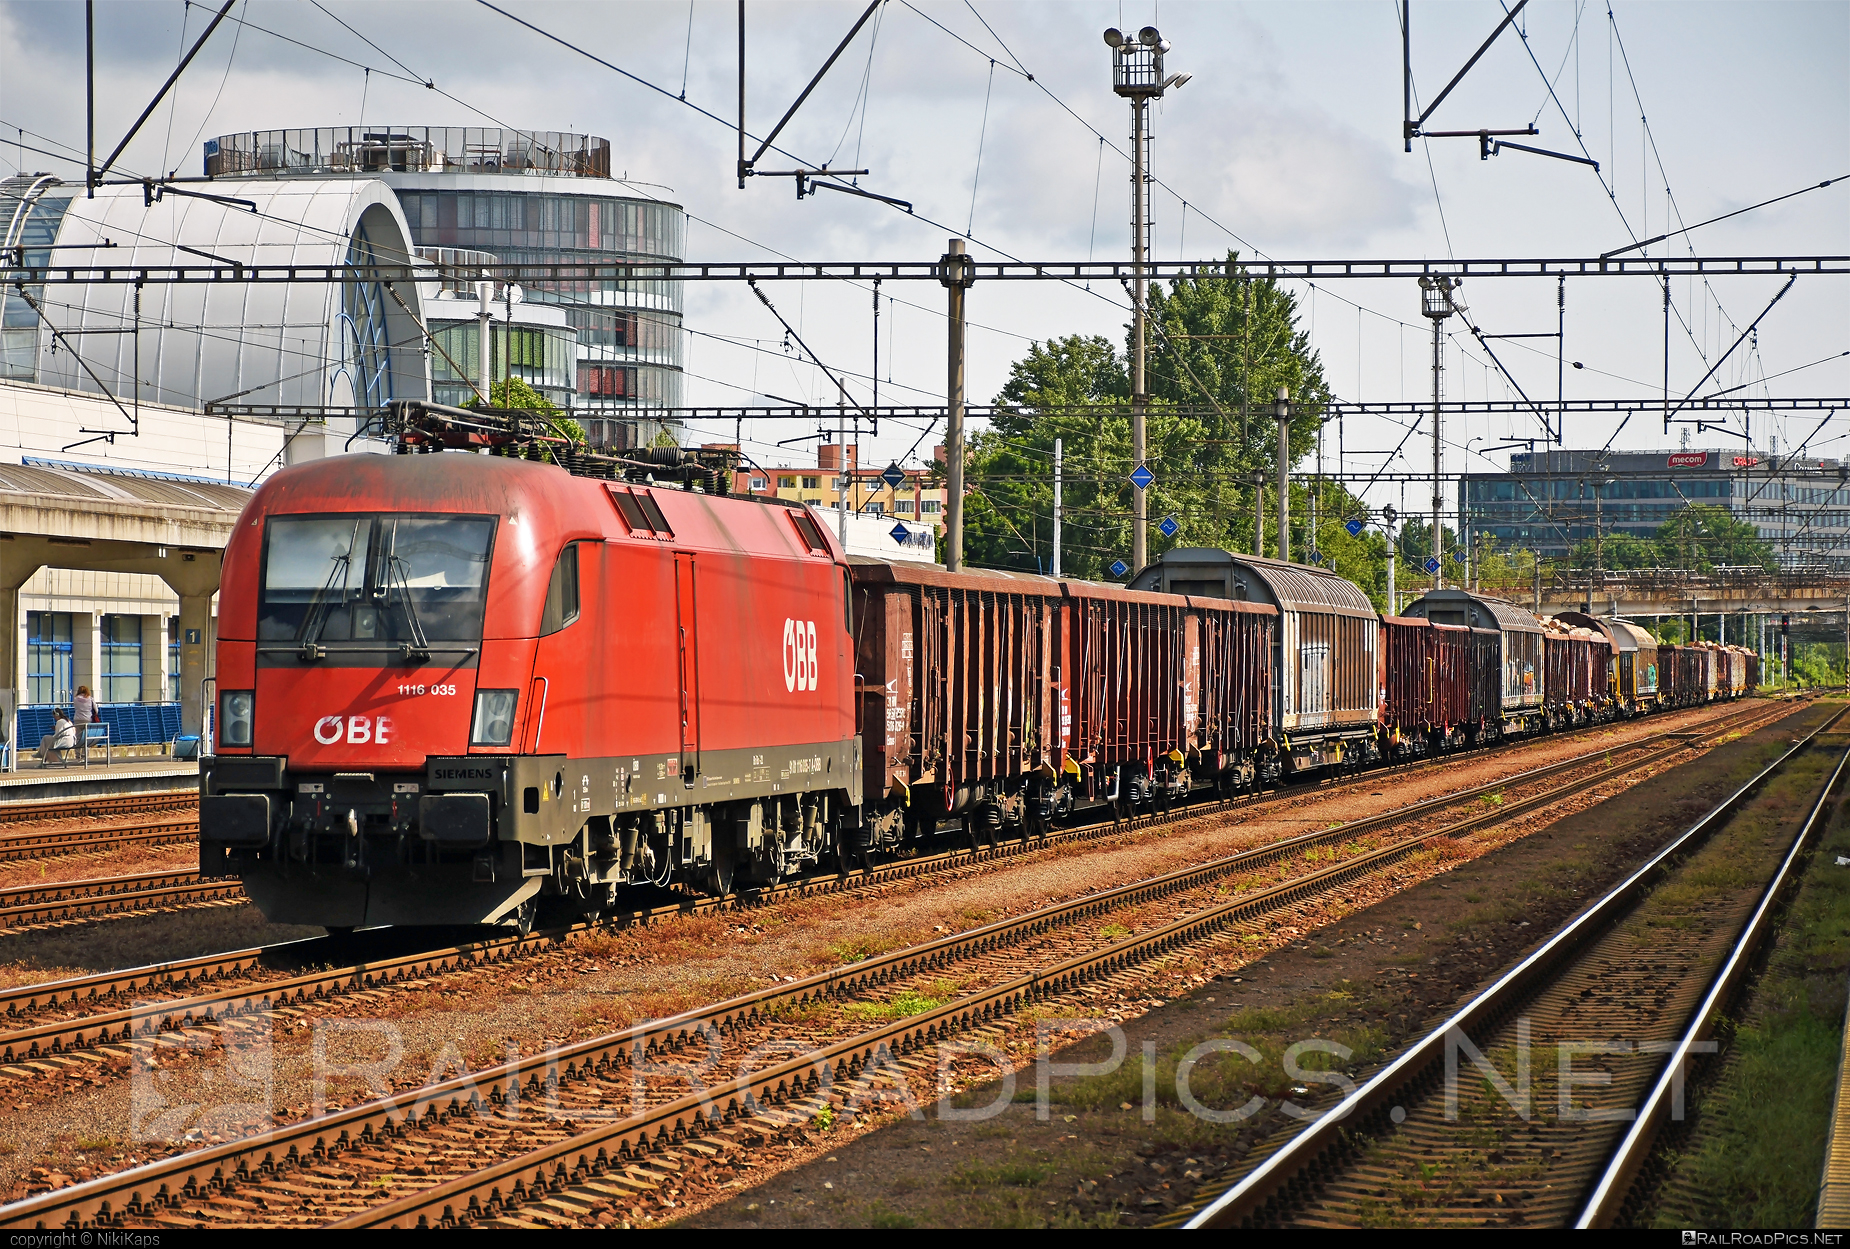 Siemens ES 64 U2 - 1116 035 operated by Rail Cargo Austria AG #es64 #es64u2 #eurosprinter #mixofcargo #obb #osterreichischebundesbahnen #rcw #siemens #siemensEs64 #siemensEs64u2 #siemenstaurus #taurus #tauruslocomotive